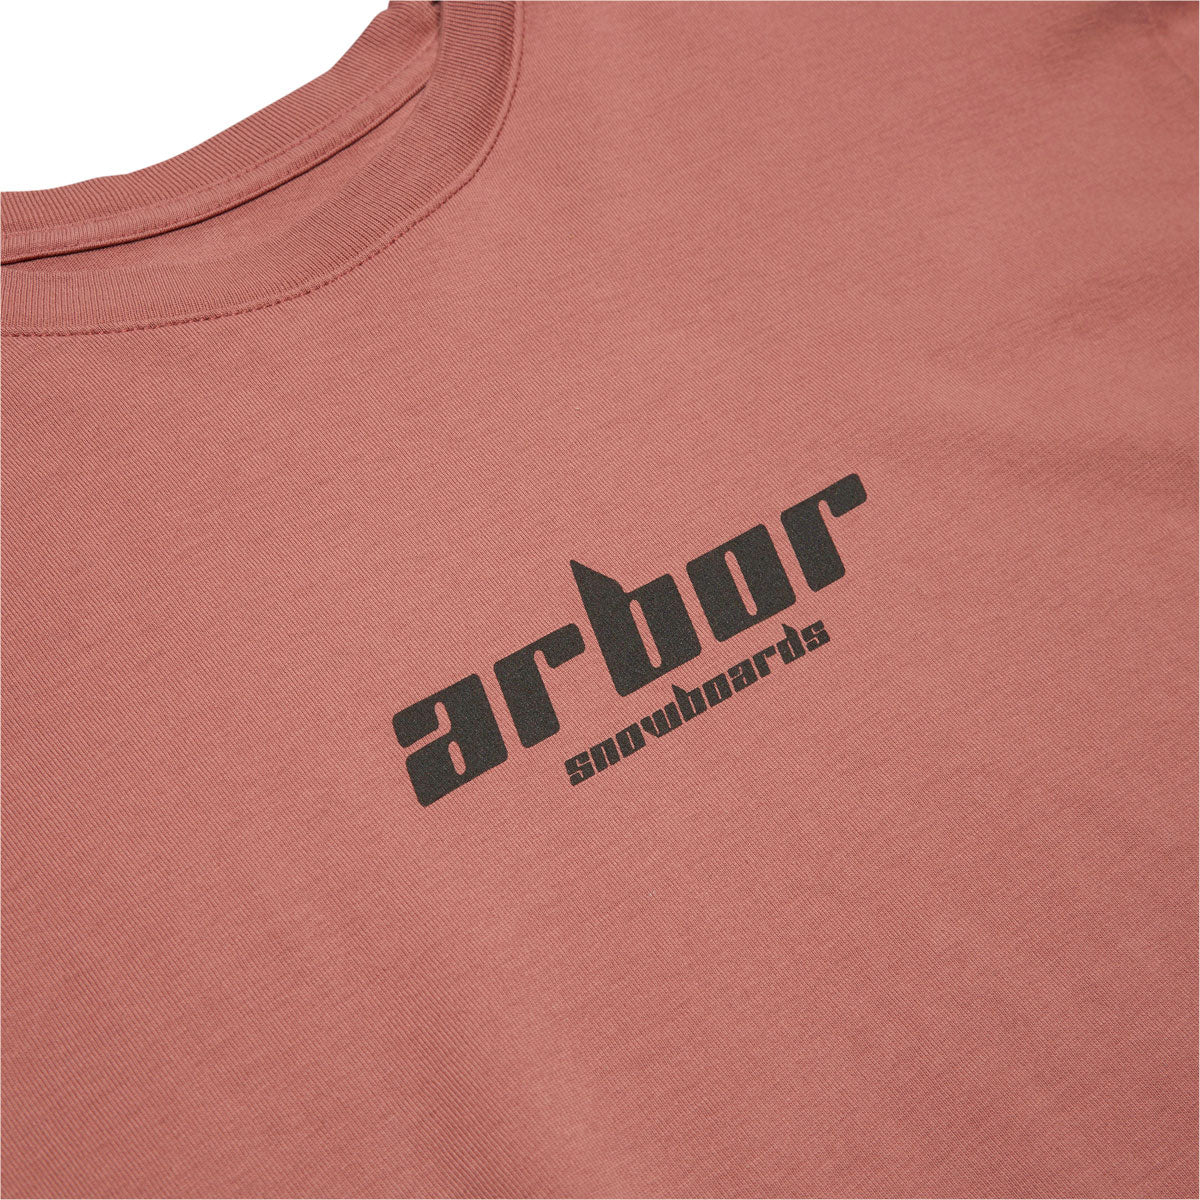 Arbor Draft Long Sleeve T-Shirt - Plum image 2